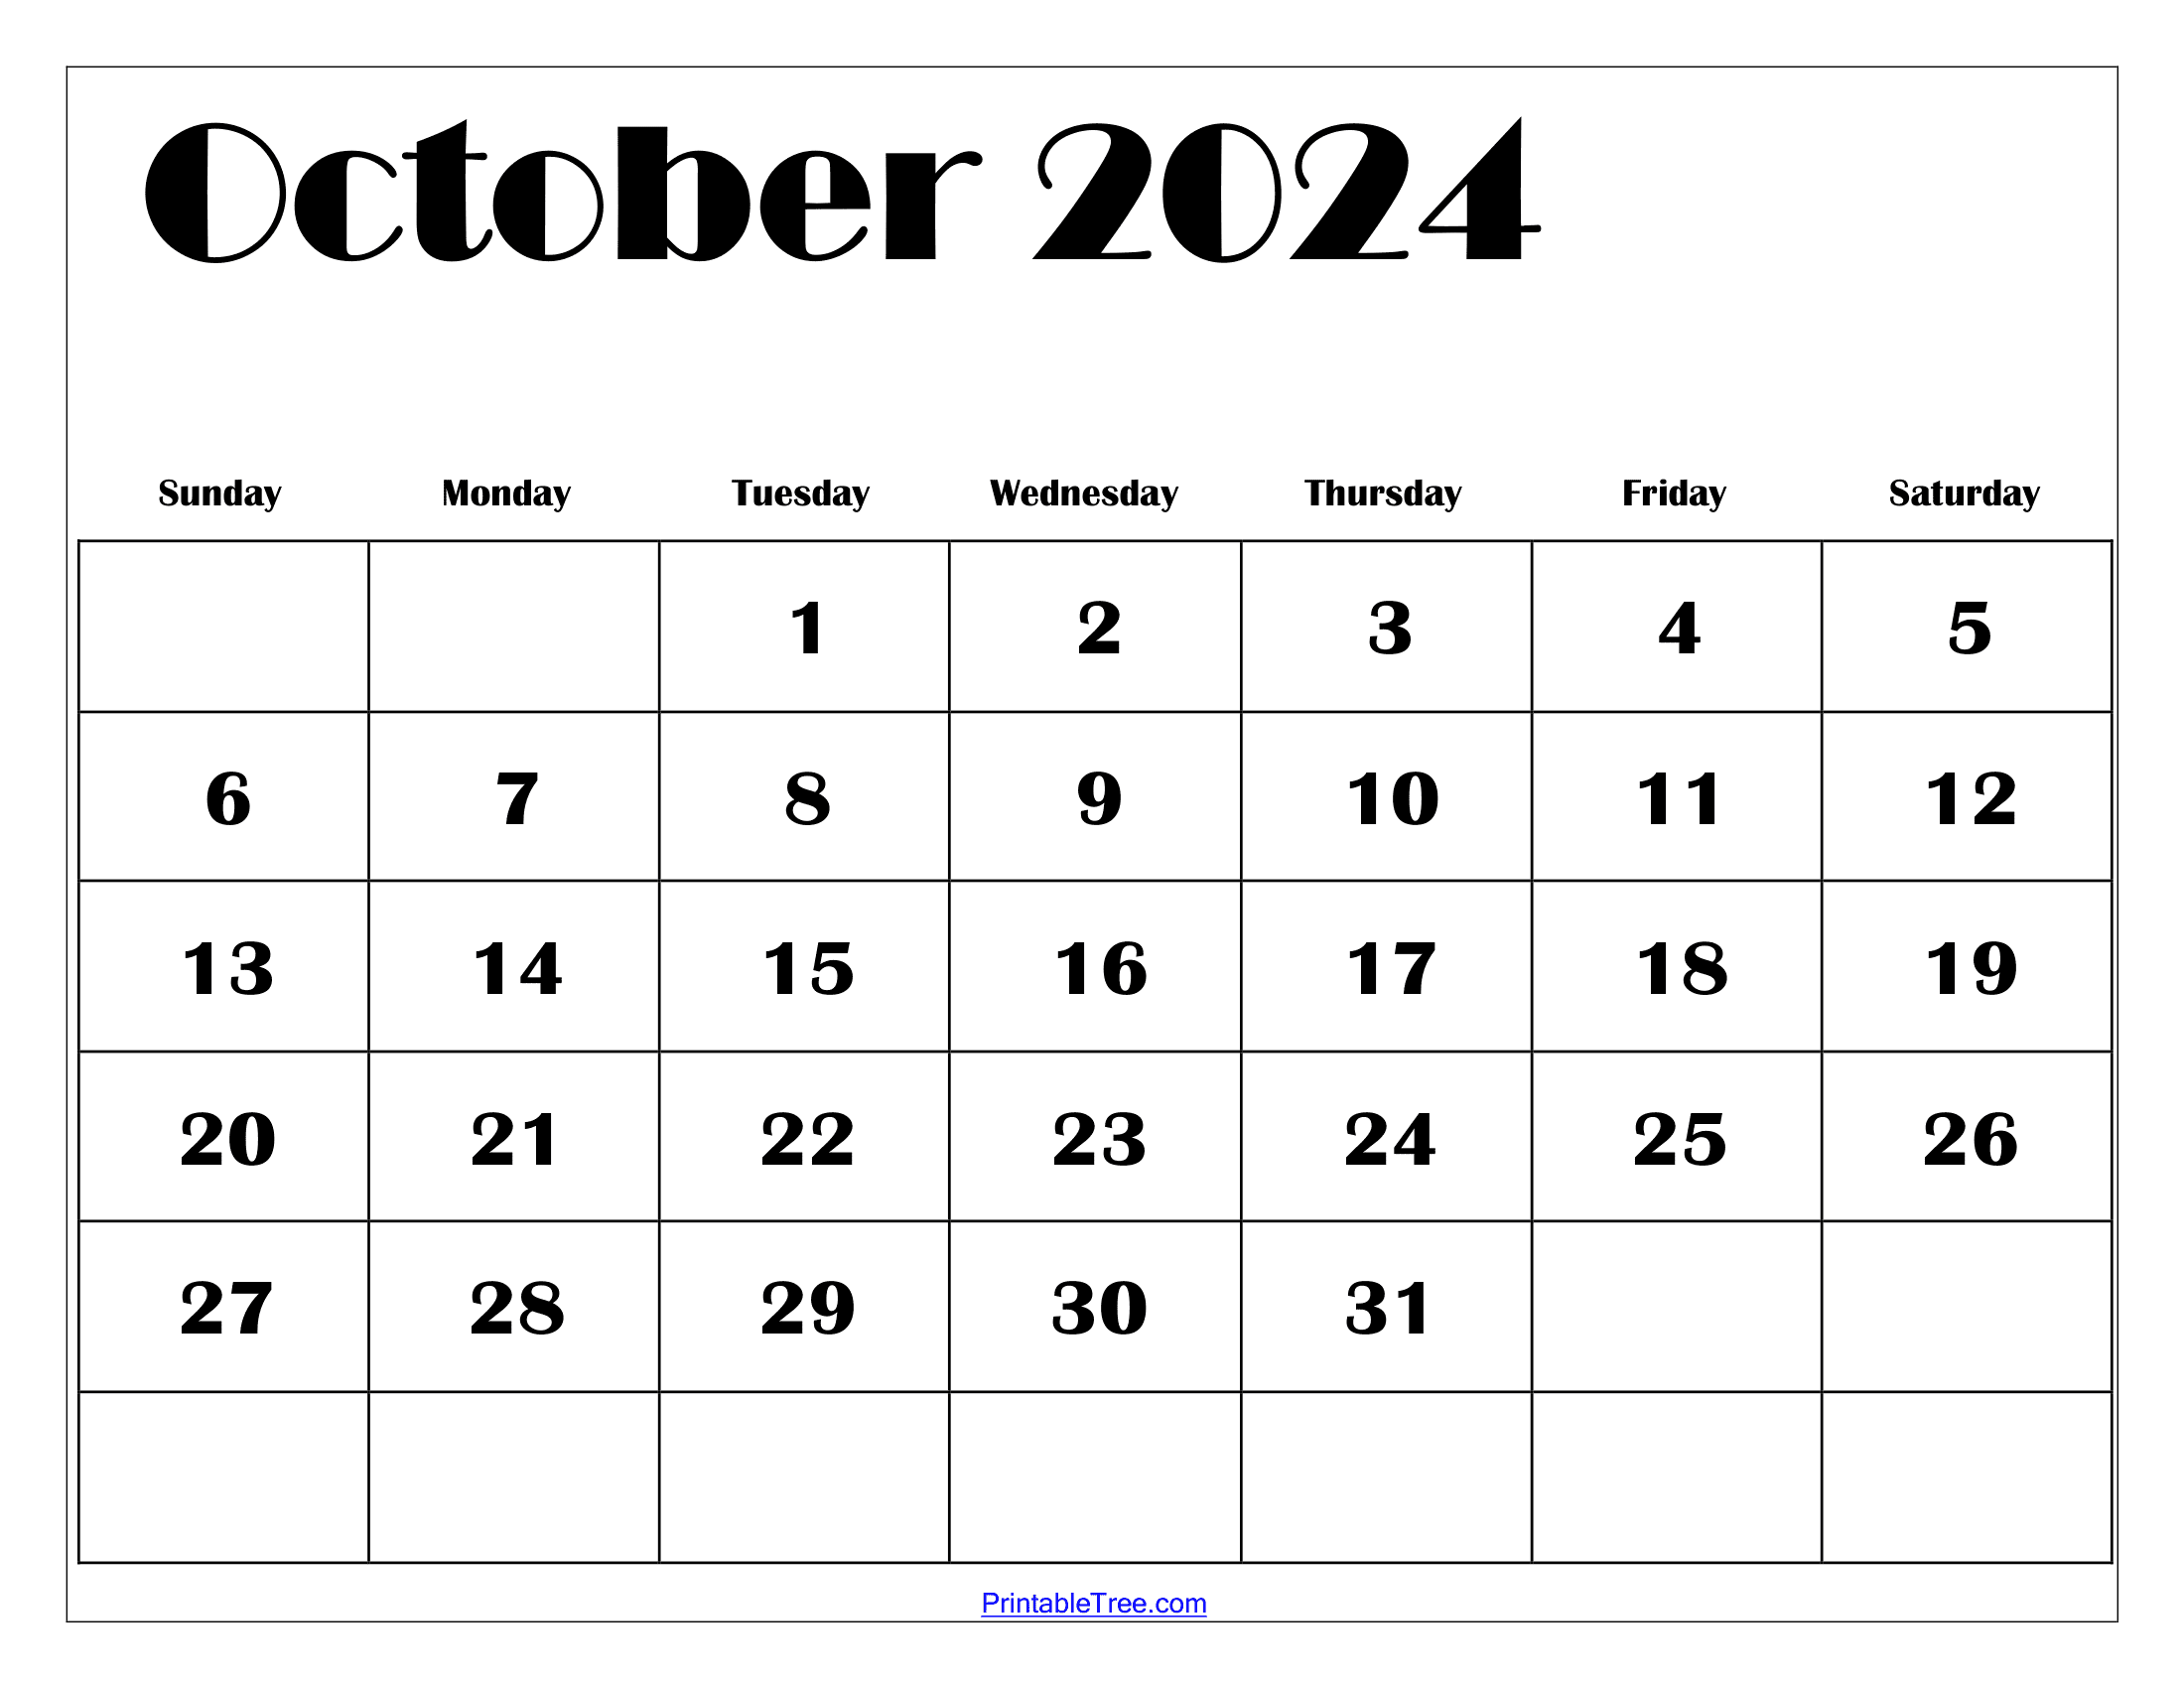 October 2024 Calendar Printable Pdf Free Templates With Holidays for October 2024 Calendar Free Printable